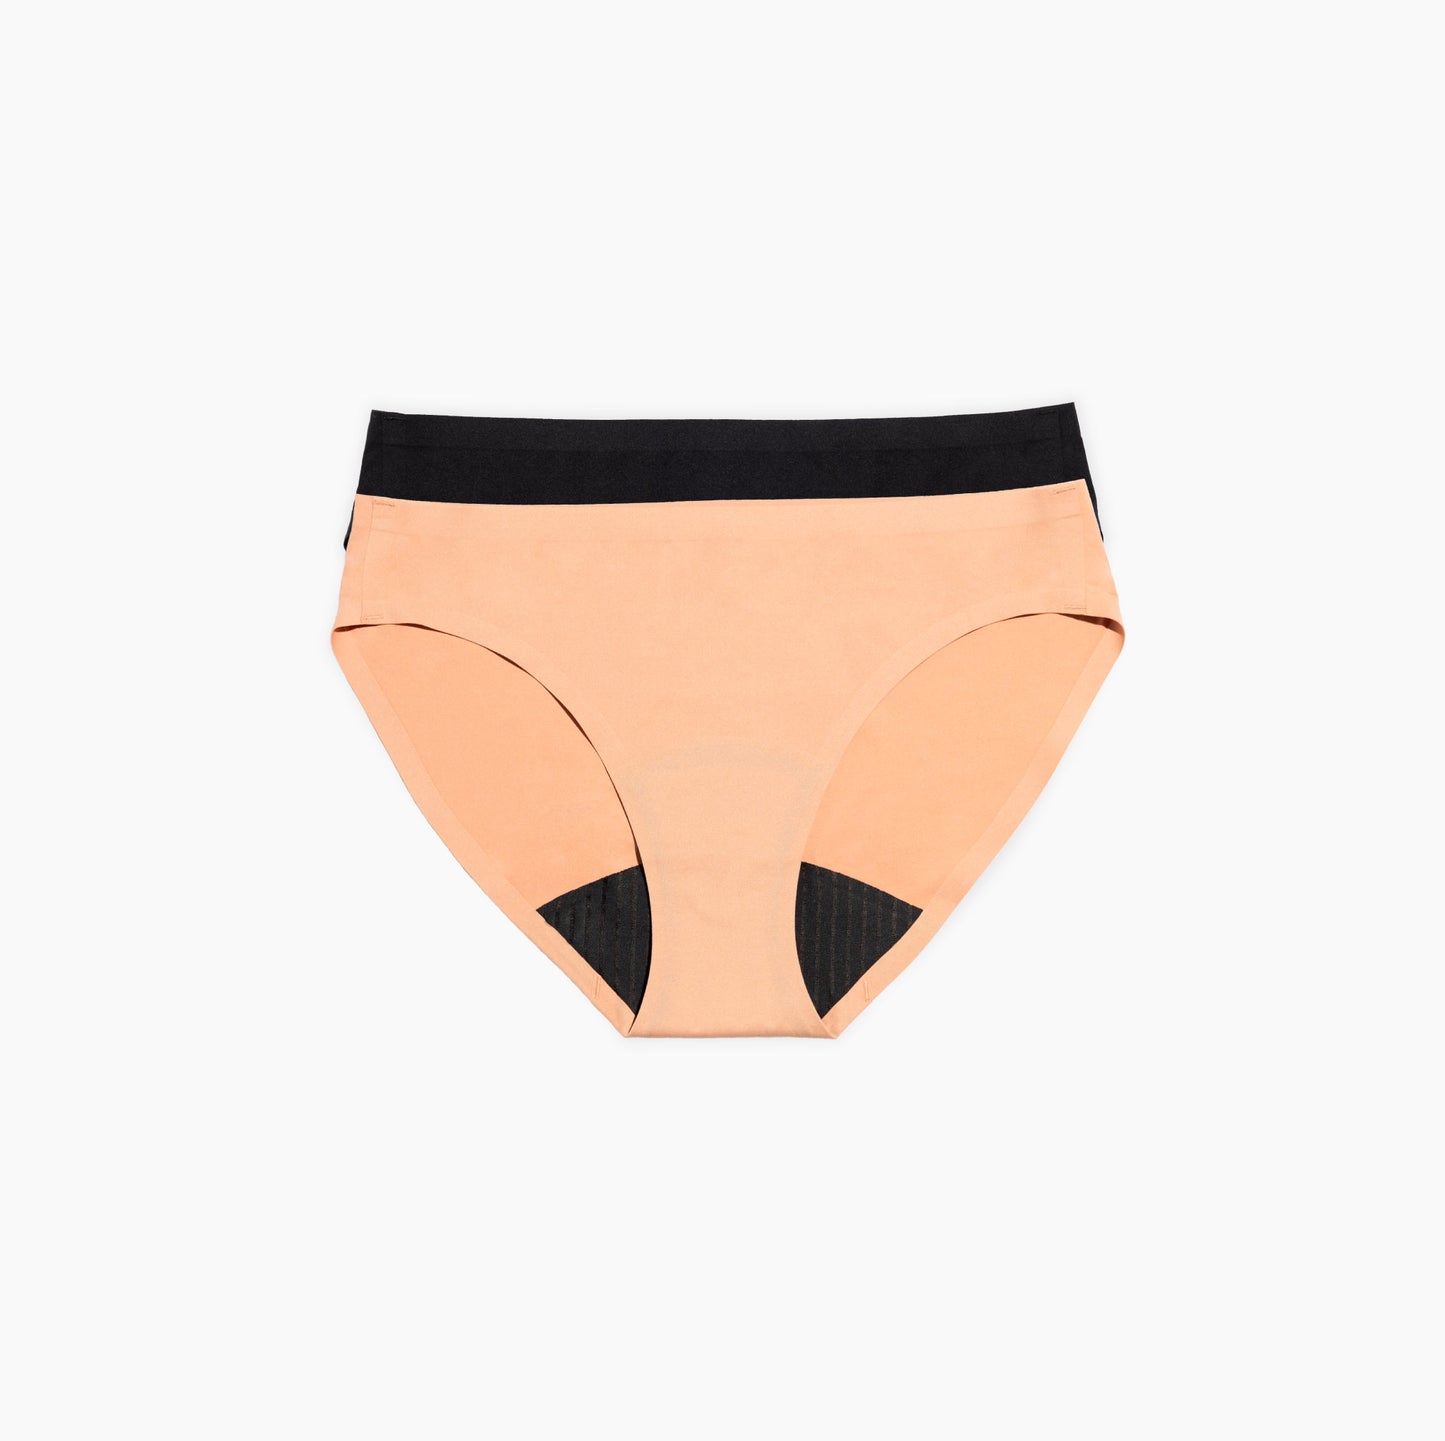 LEAKPROOF2.0 Seamless Bikini Period Underwear for Women | Period Panties  Holds 4 Tampons | Mild Incontinence Leak Proof Underwear (4XL/5XL, Black)